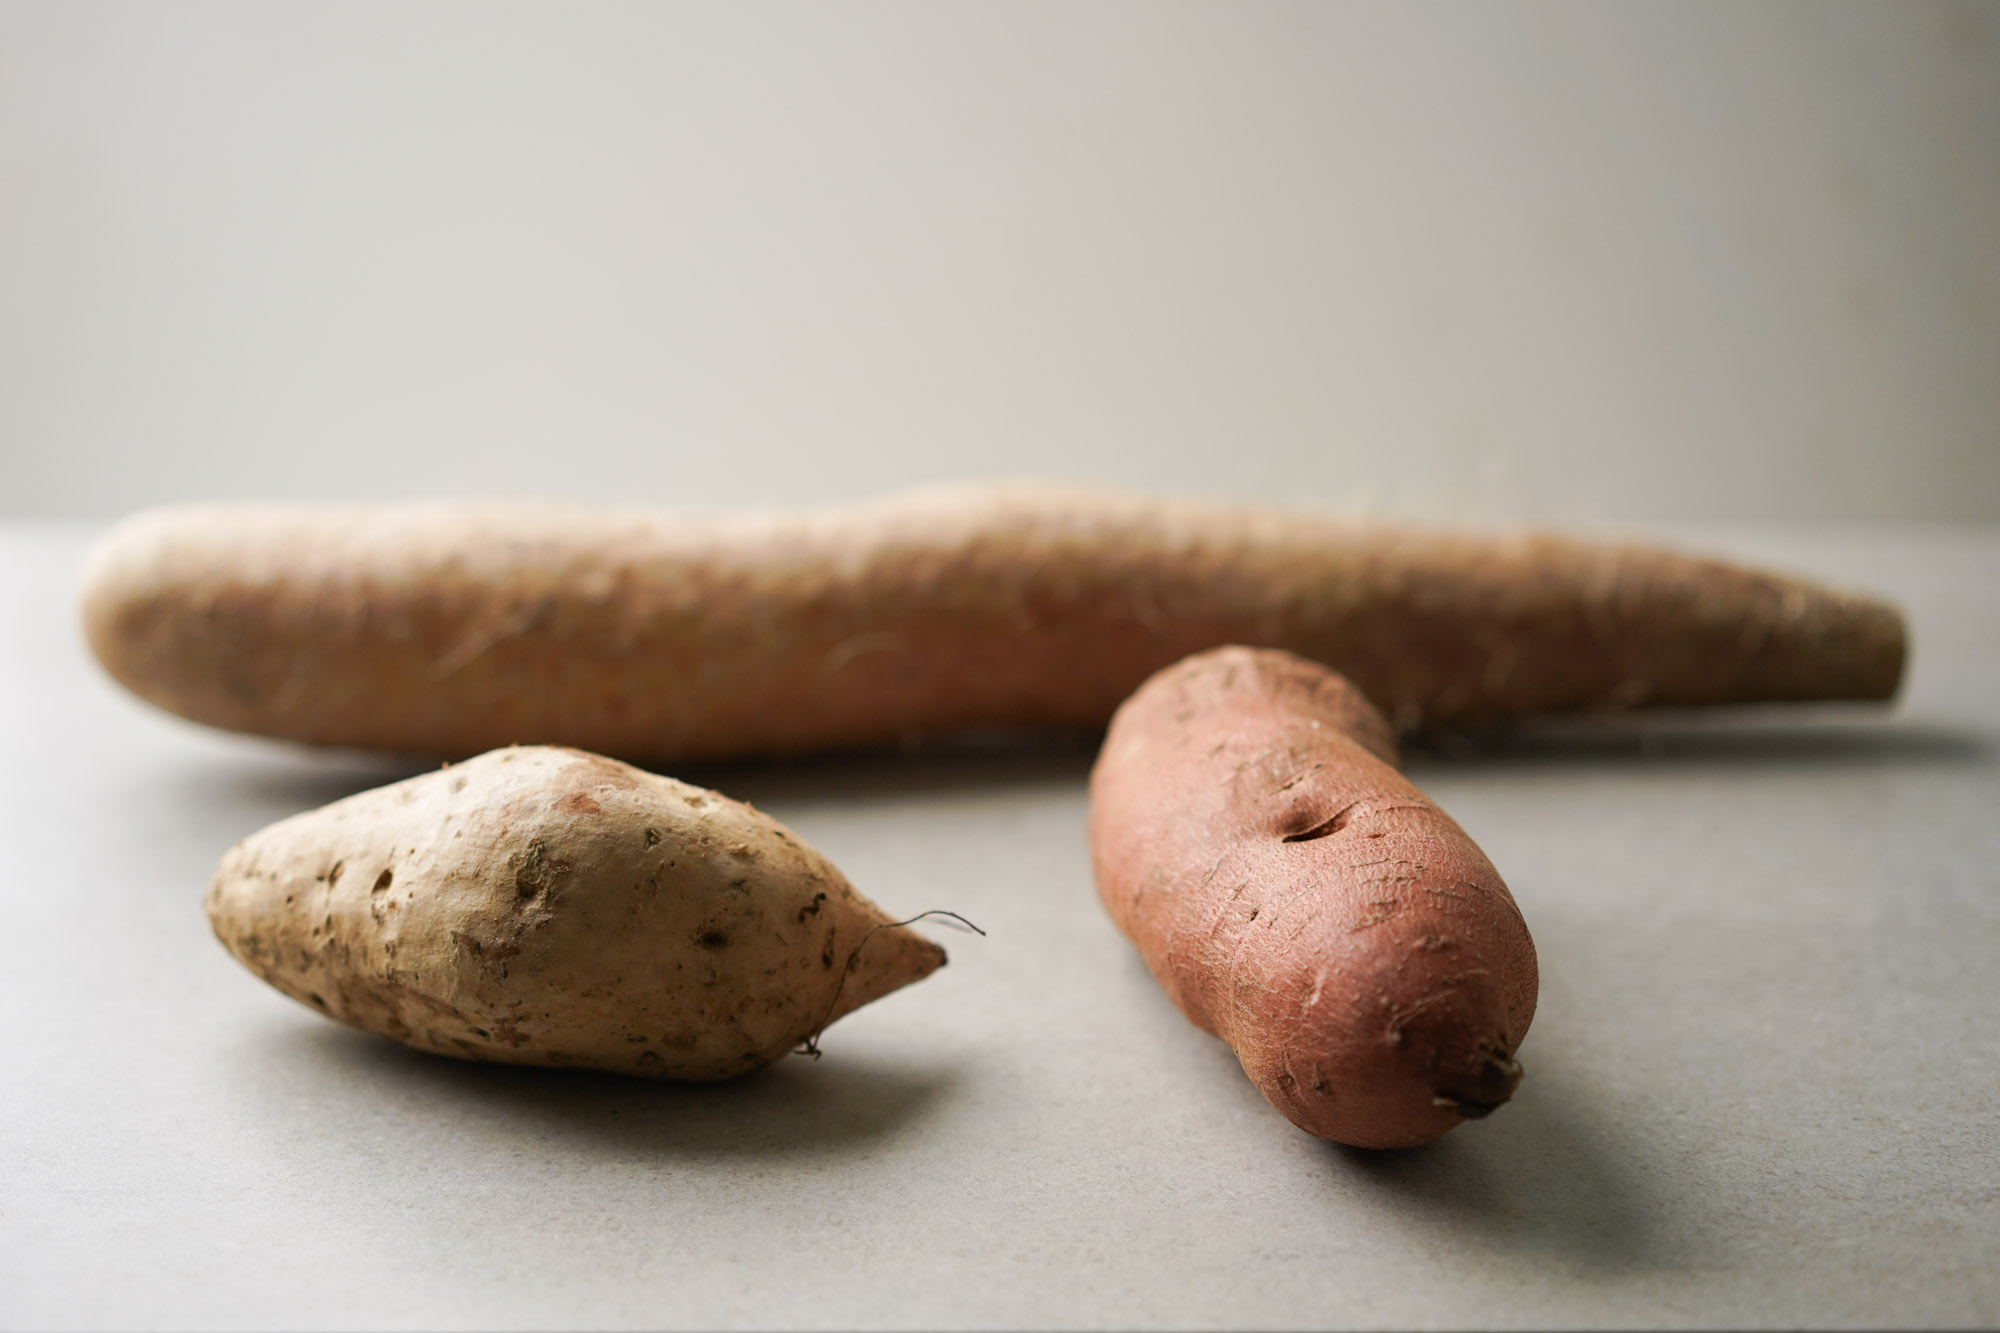 https://www.hungryhuy.com/wp-content/uploads/sweet-potato-vs-yams.jpg